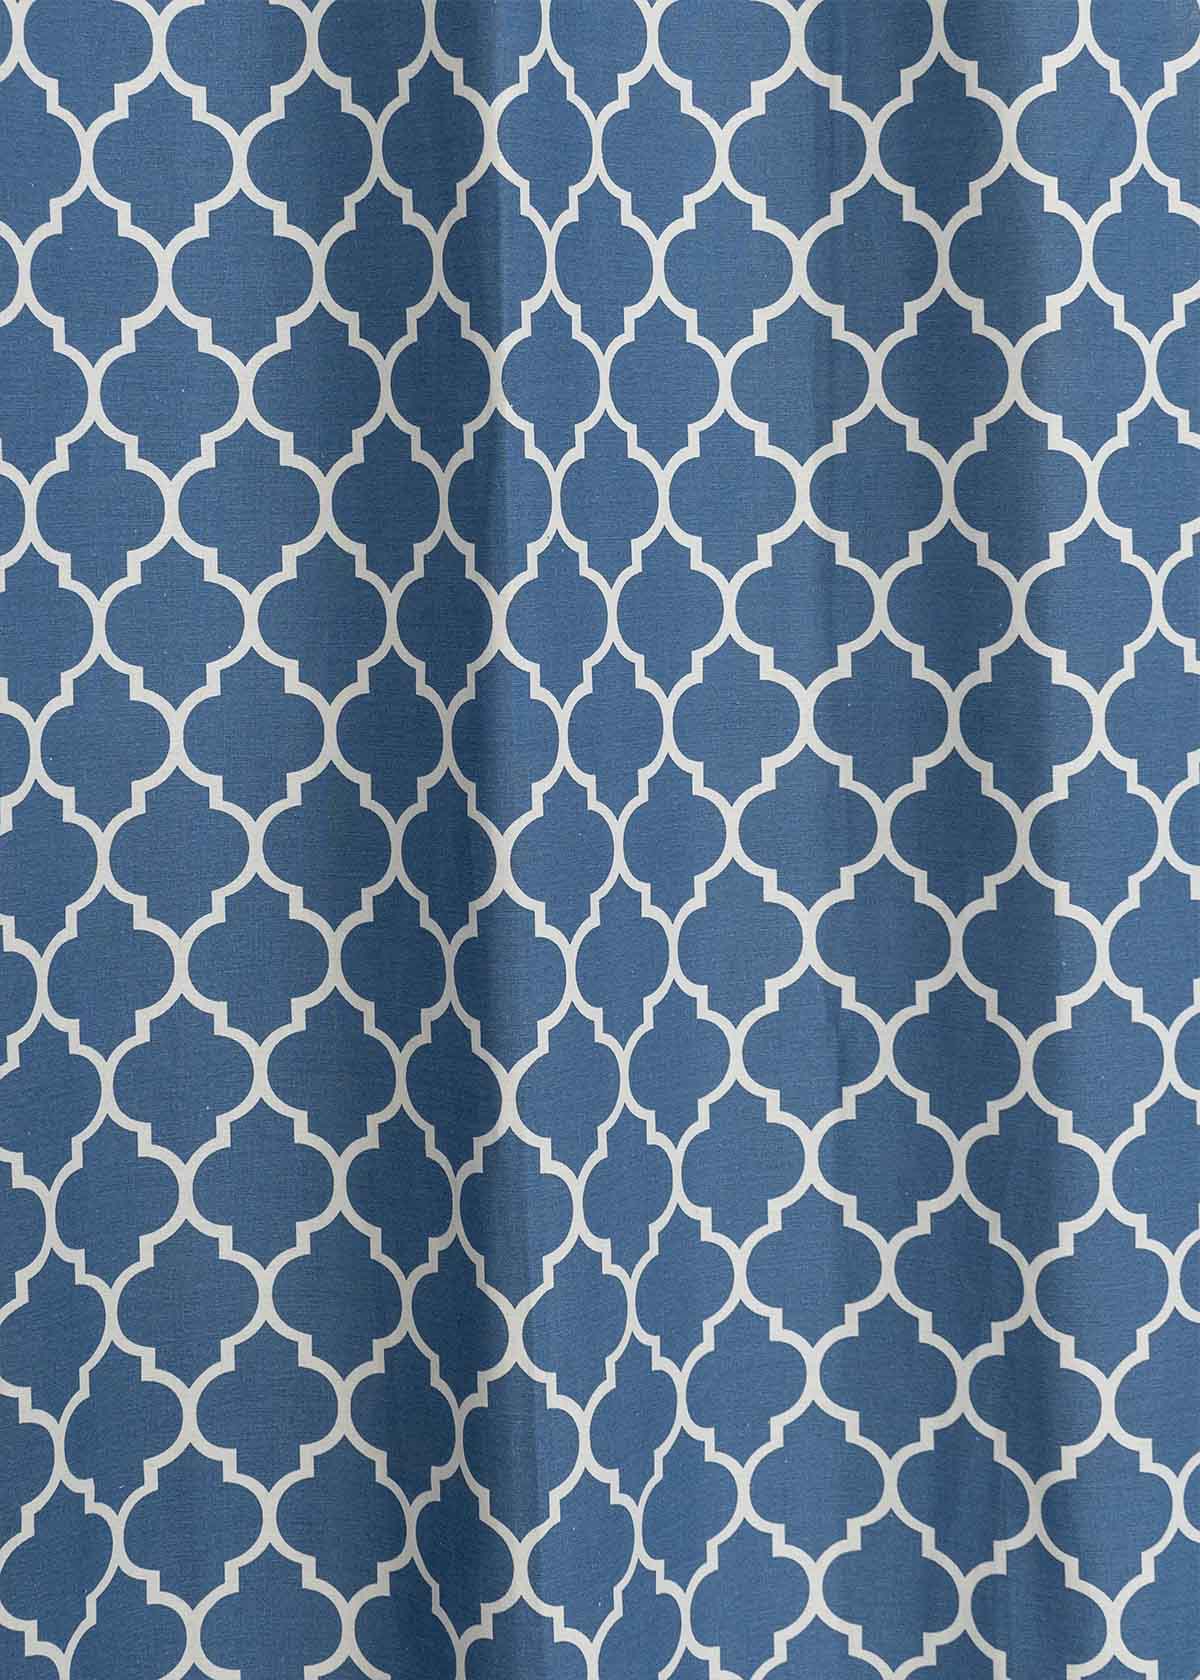 Reverse Trellis printed cotton Fabric - Royal Blue